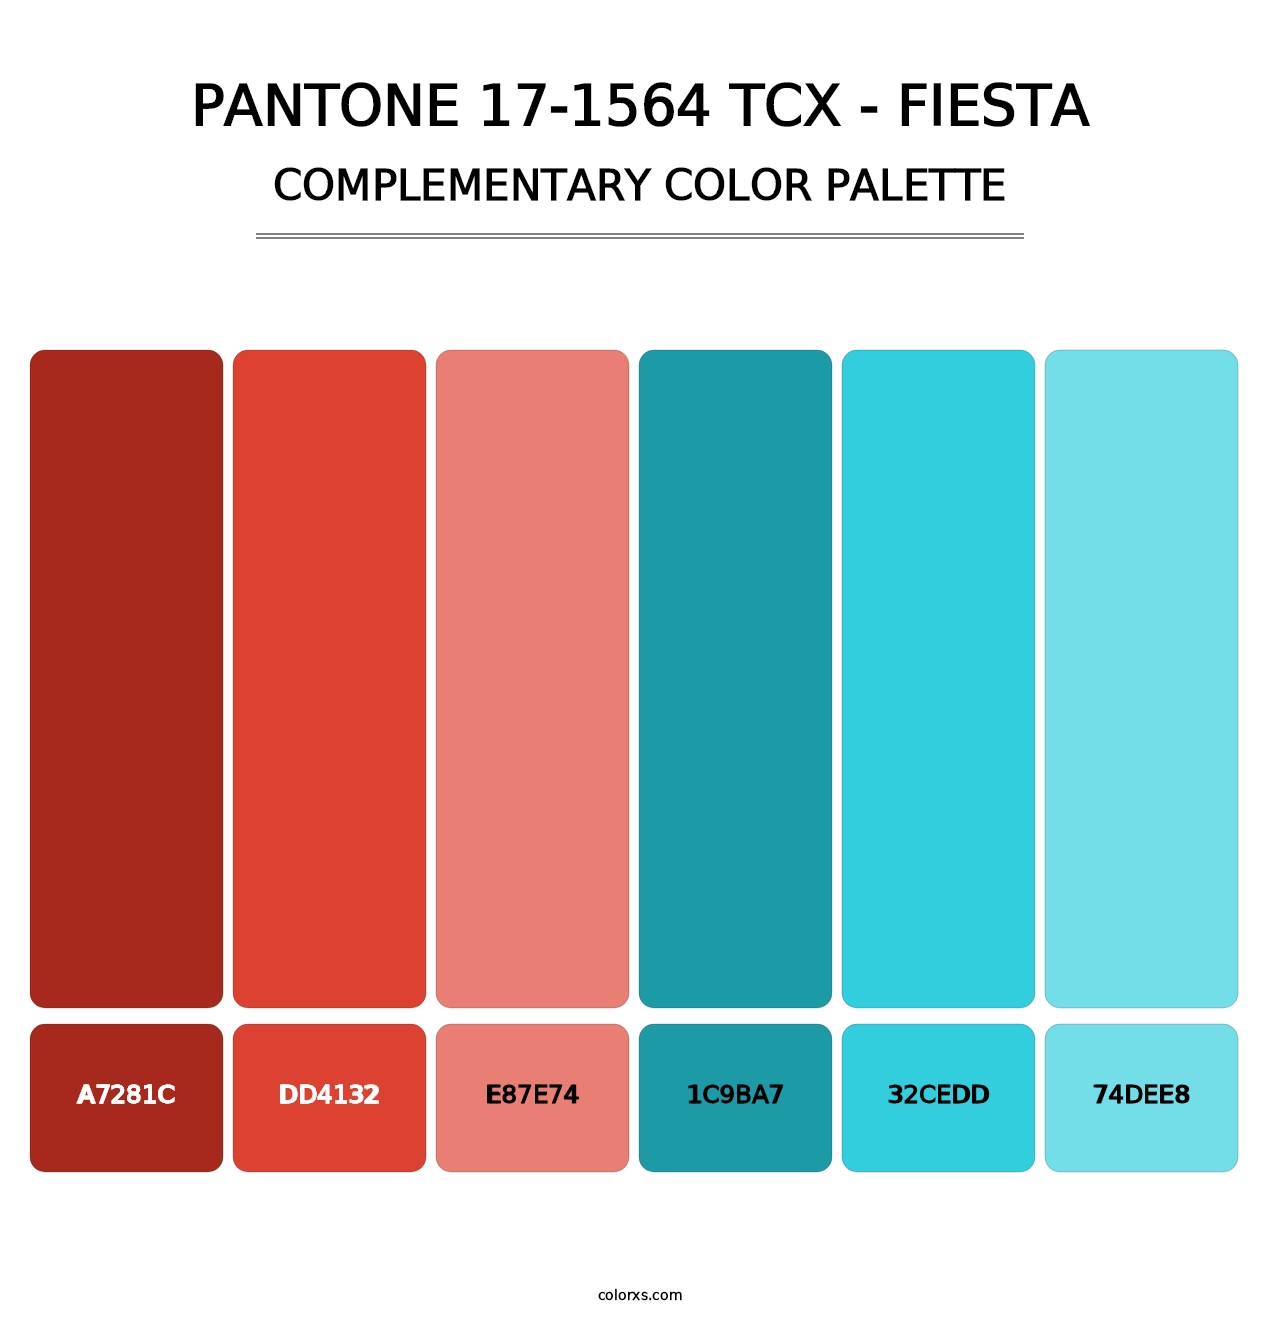 PANTONE 17-1564 TCX - Fiesta - Complementary Color Palette